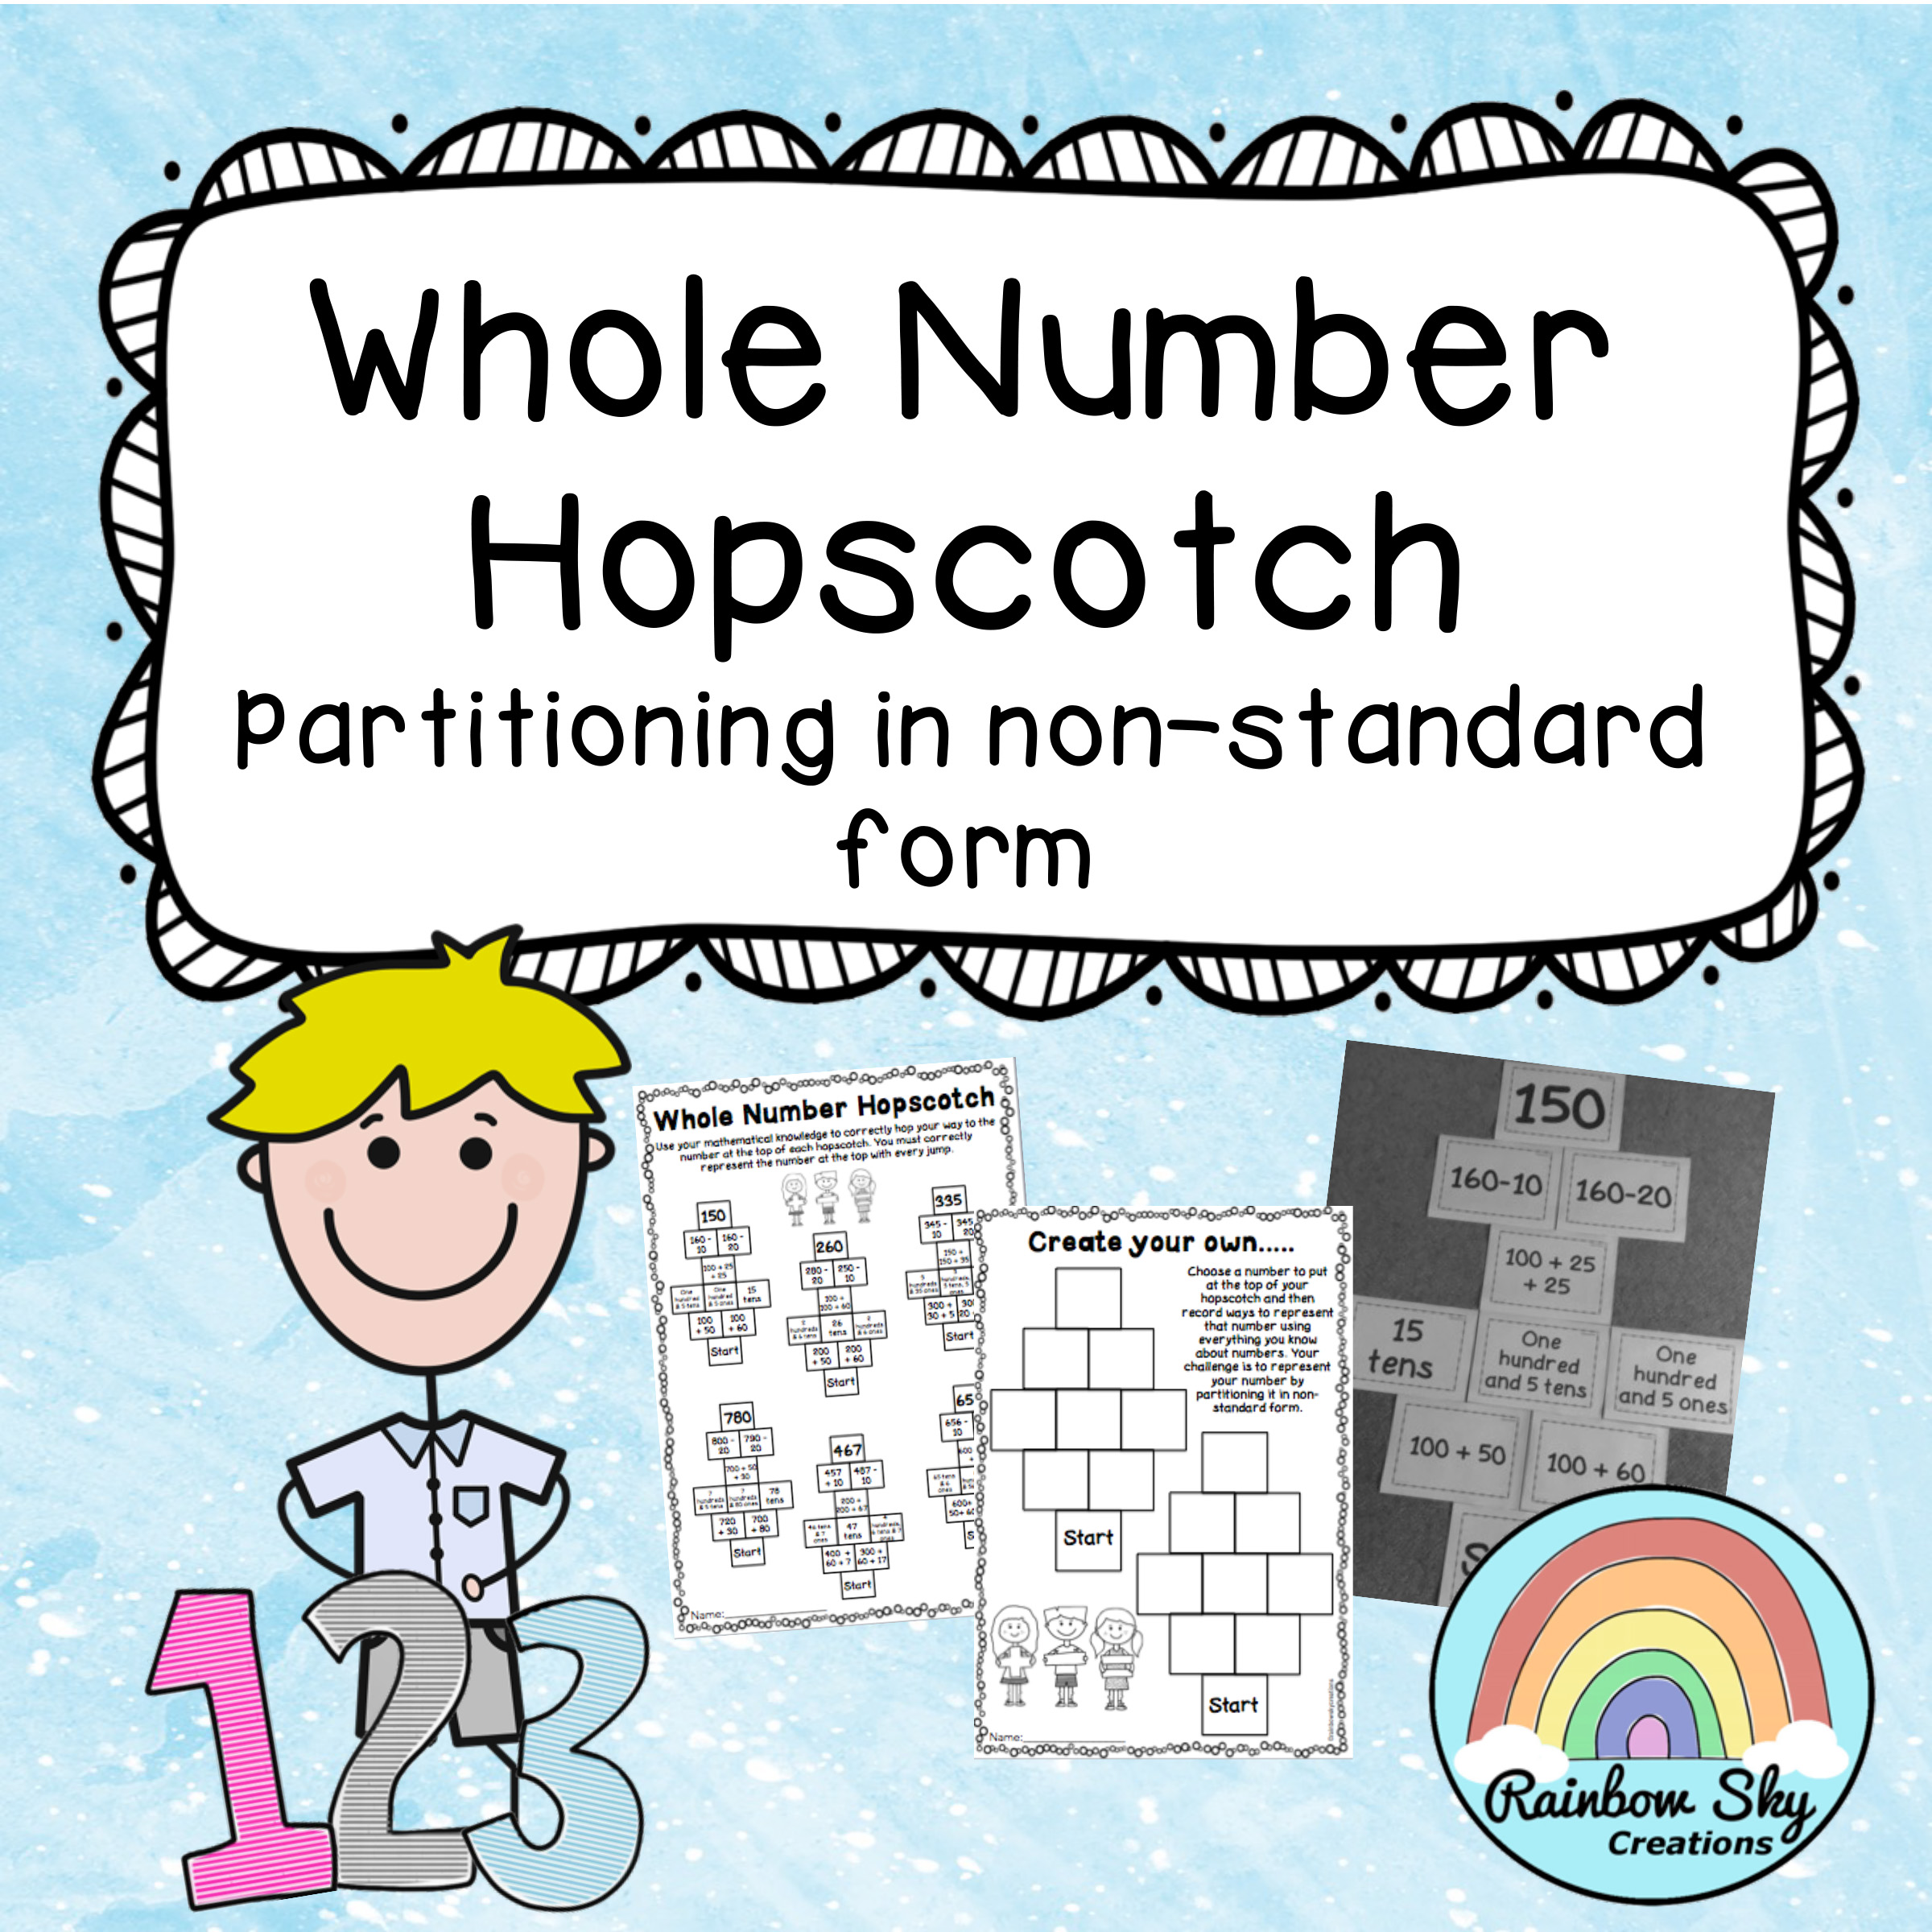 Whole Number Hopscotch